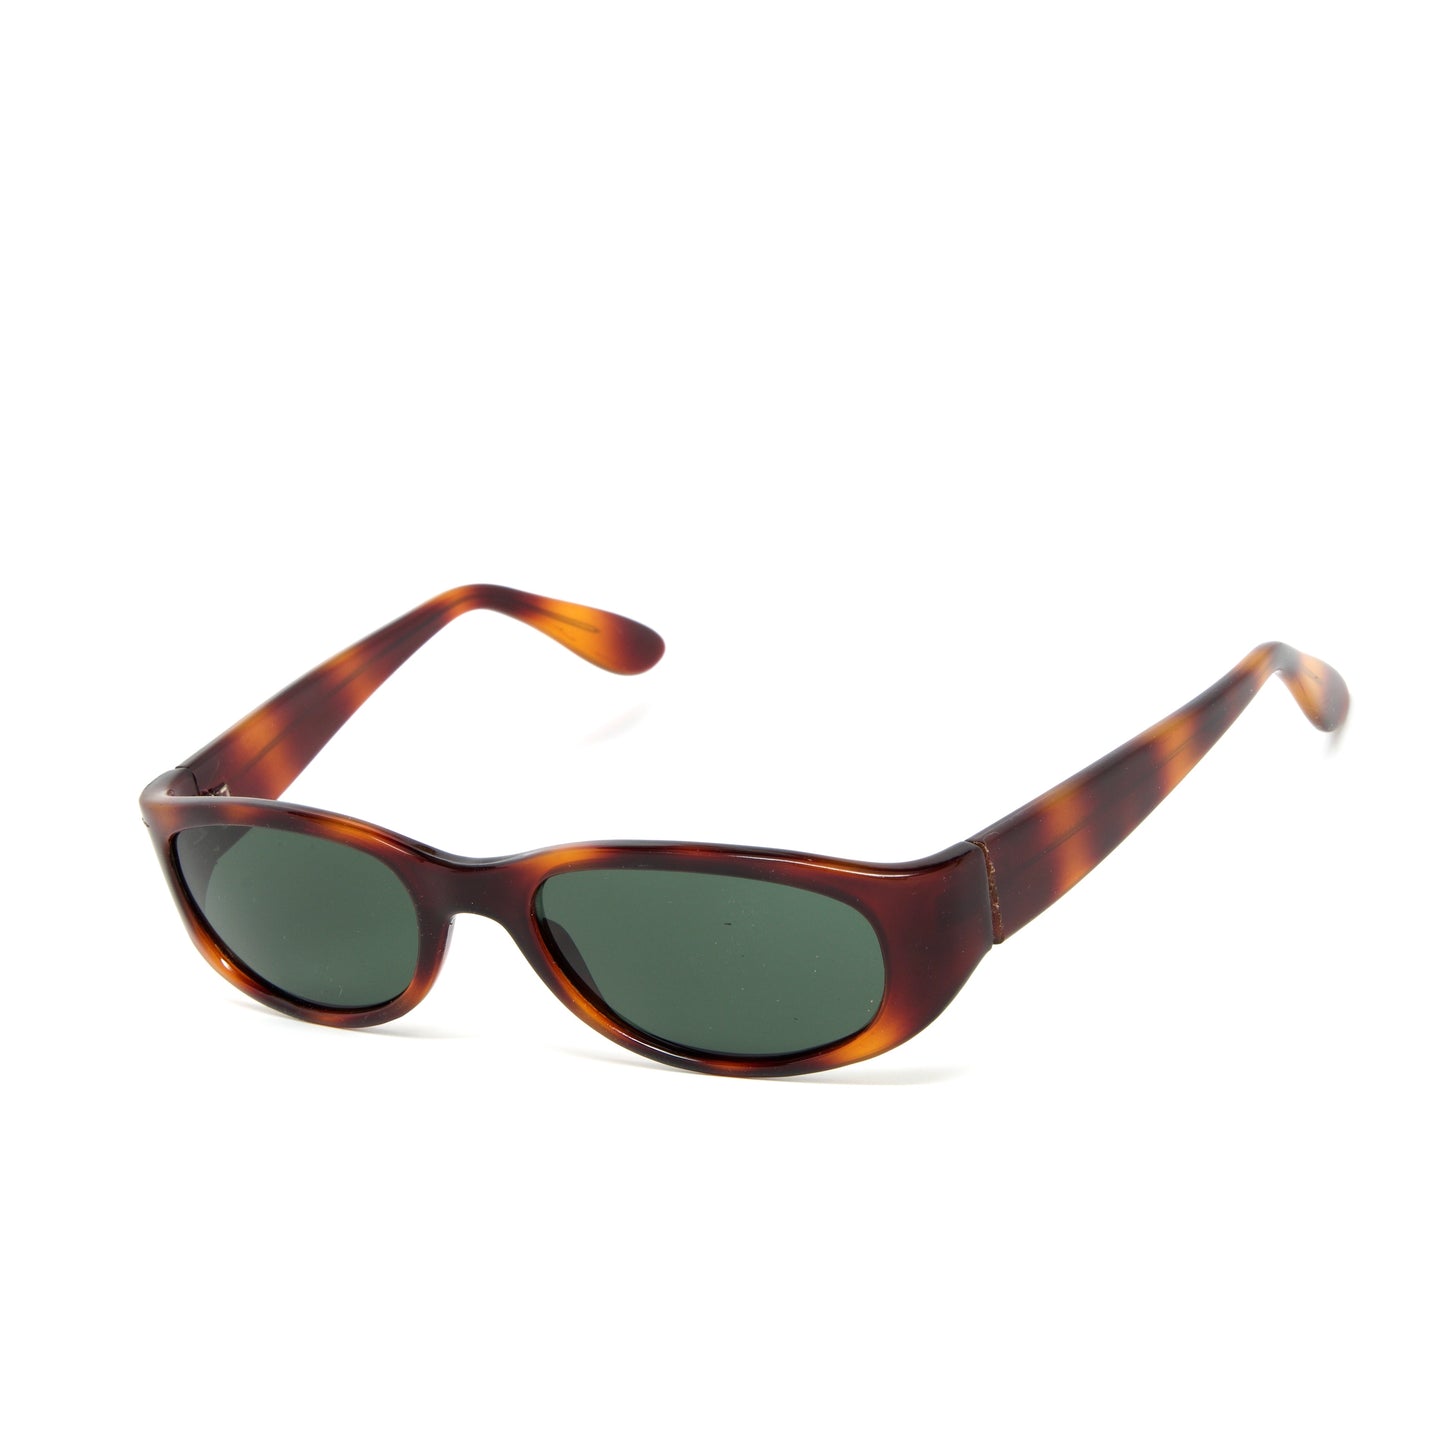 Vintage Small Size 90s Deadstock Mod Original Circular Sunglasses - Brown